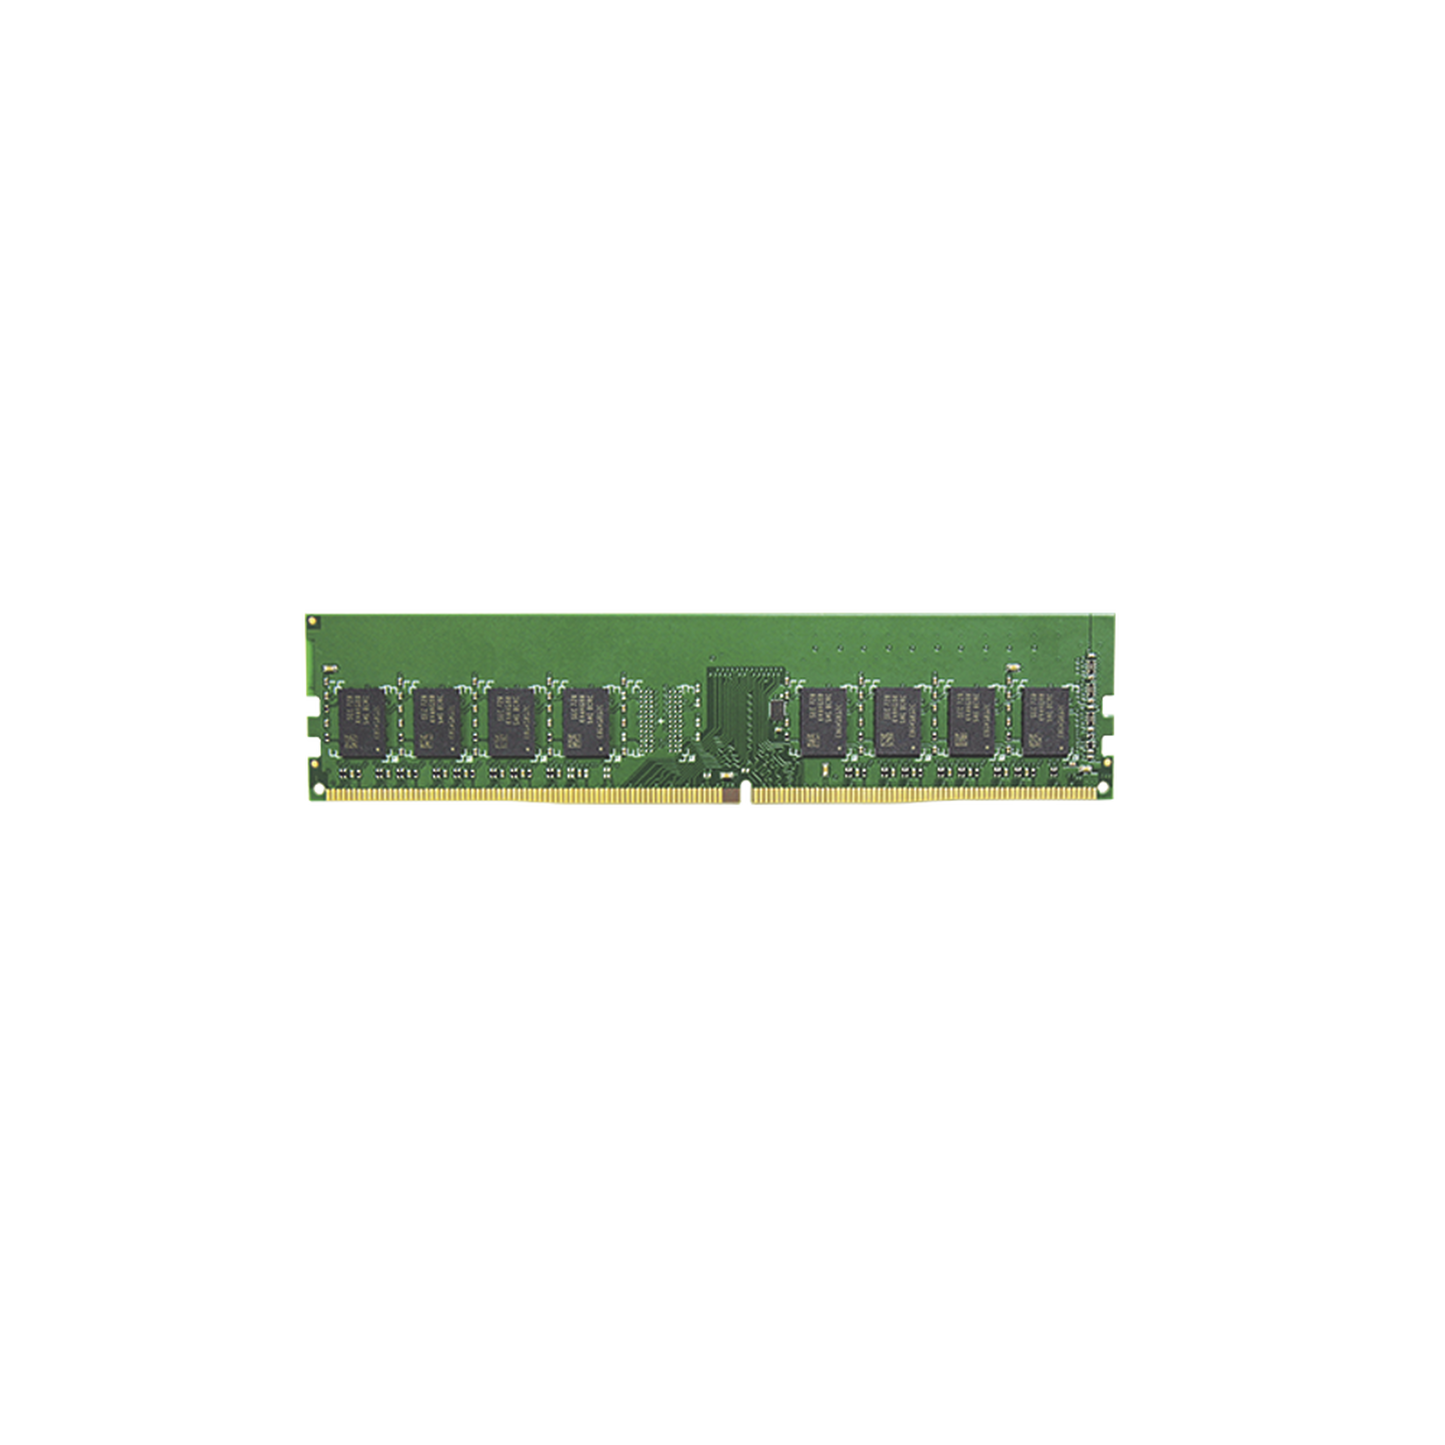 Modulo de memoria RAM de 4GB para equipos Synology